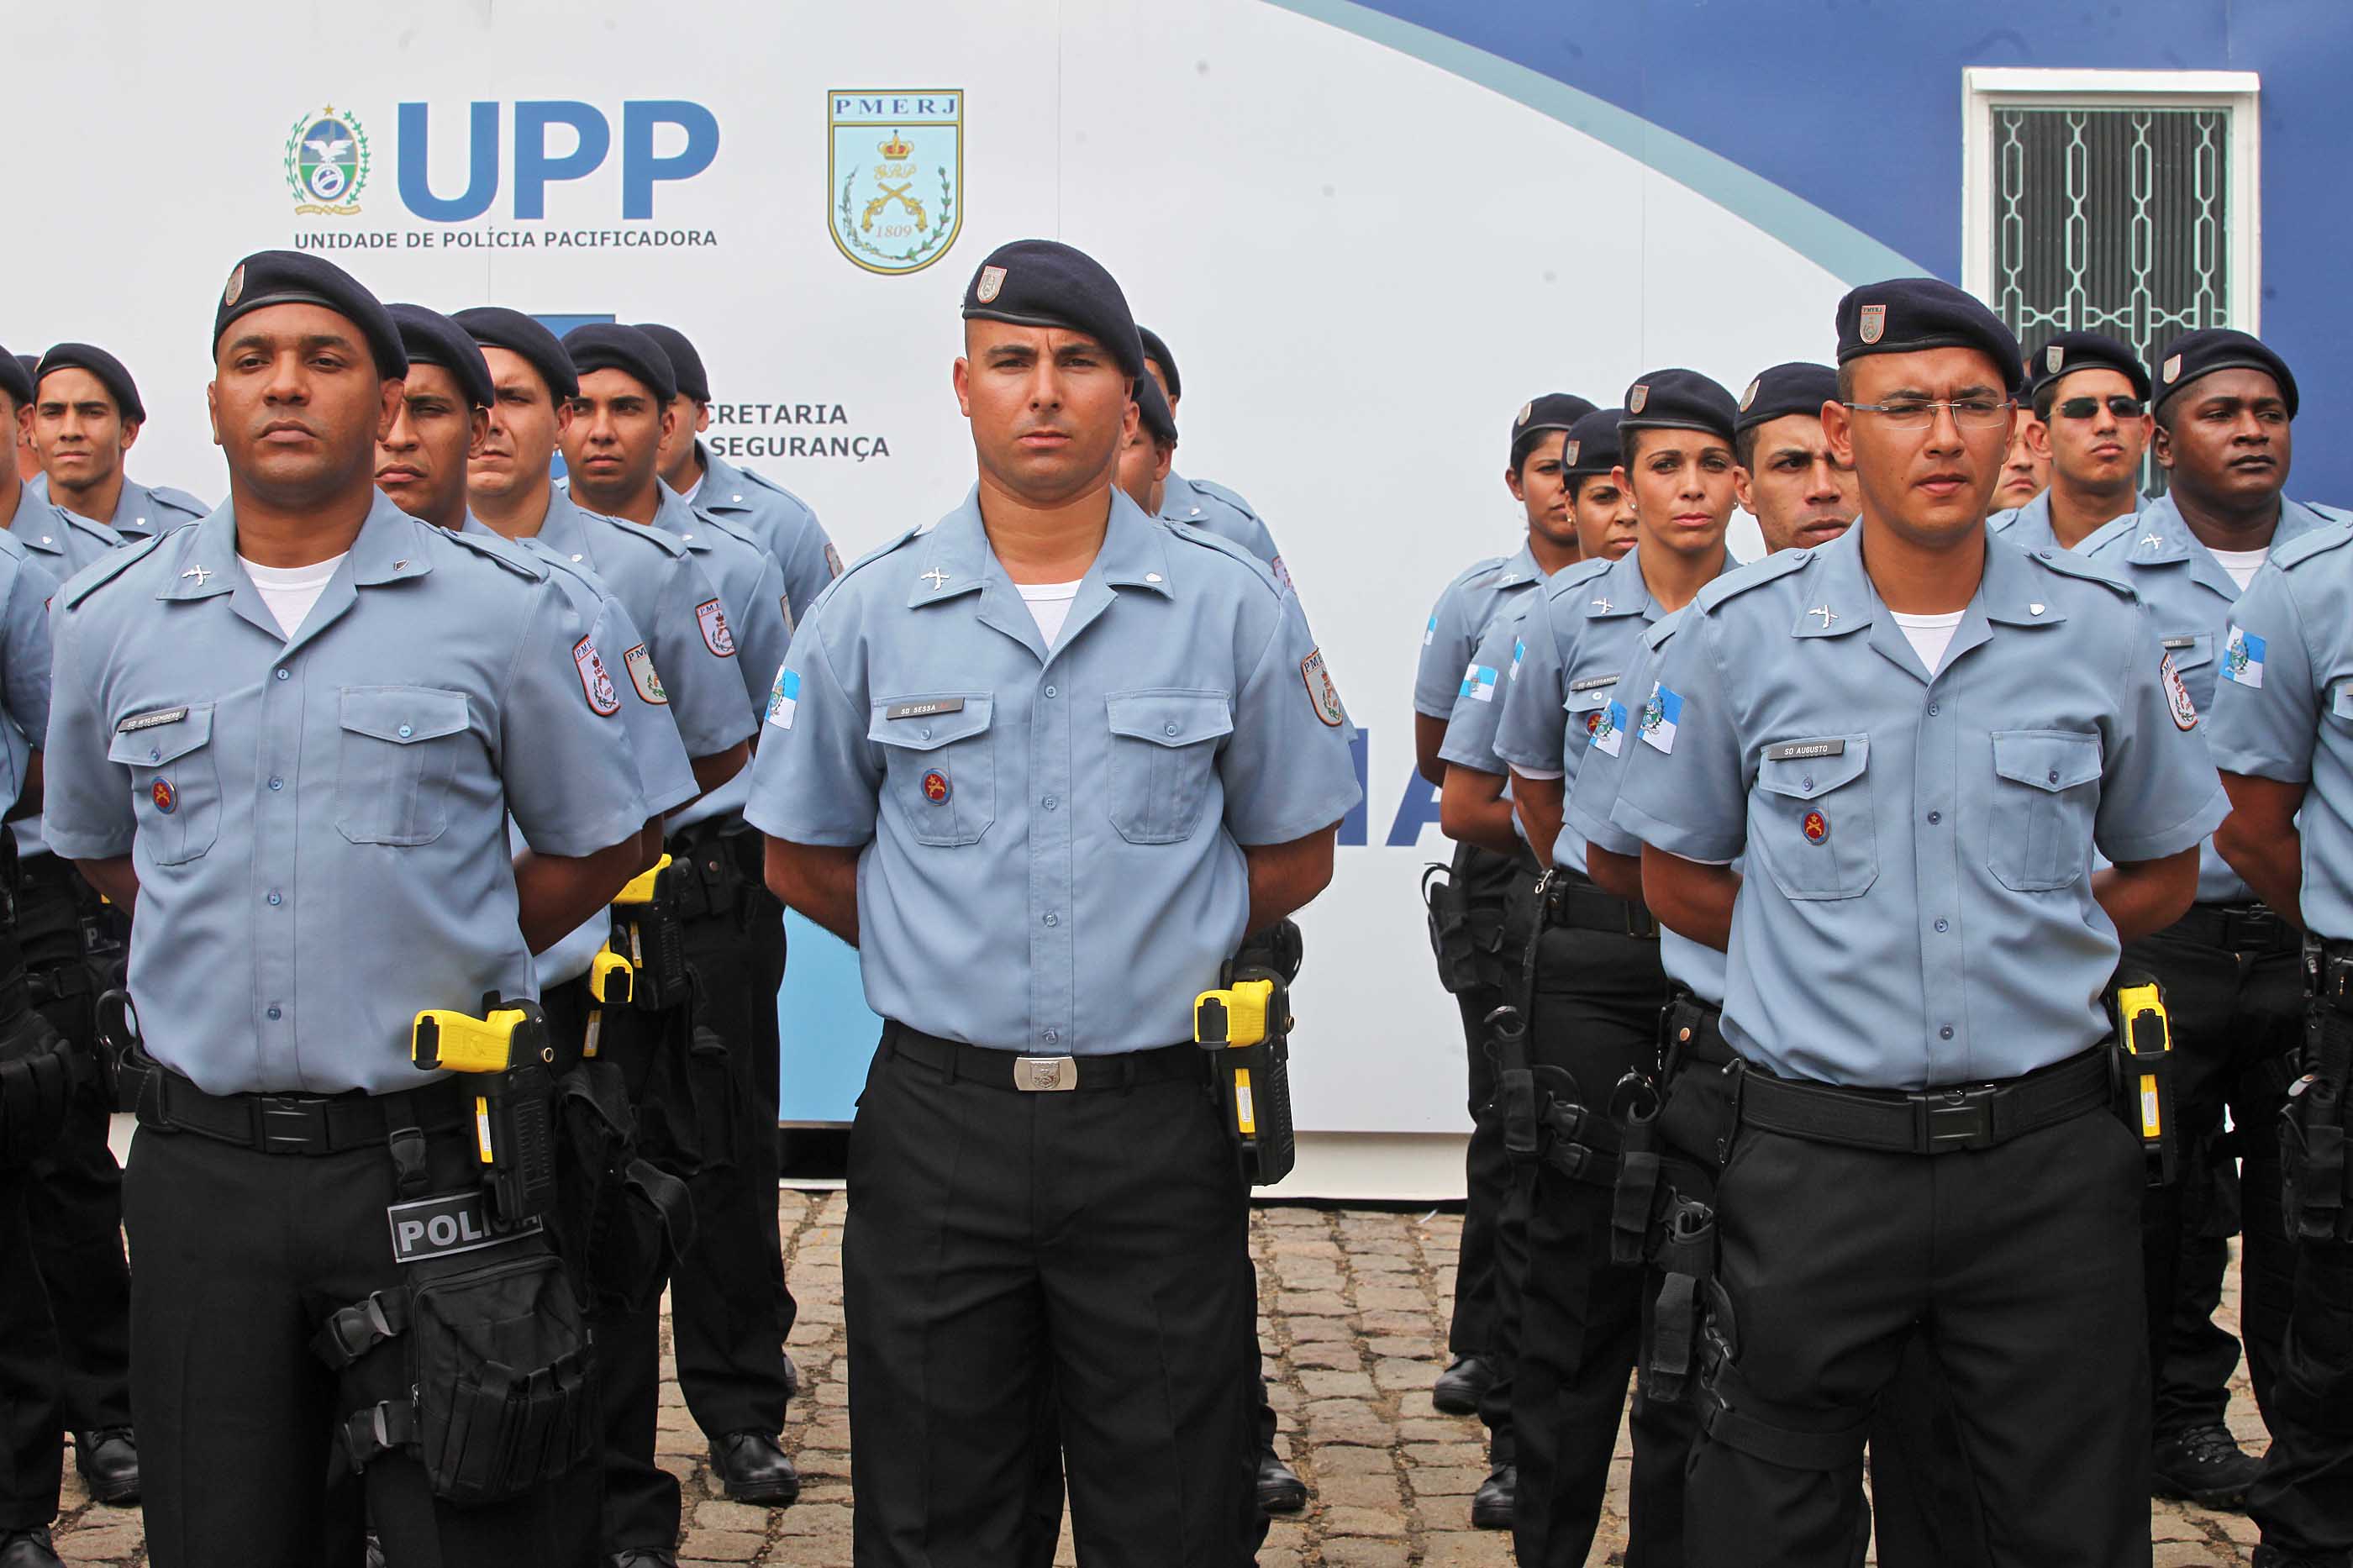 Rio Inaugurates Two New UPPs in Zona Norte: Daily